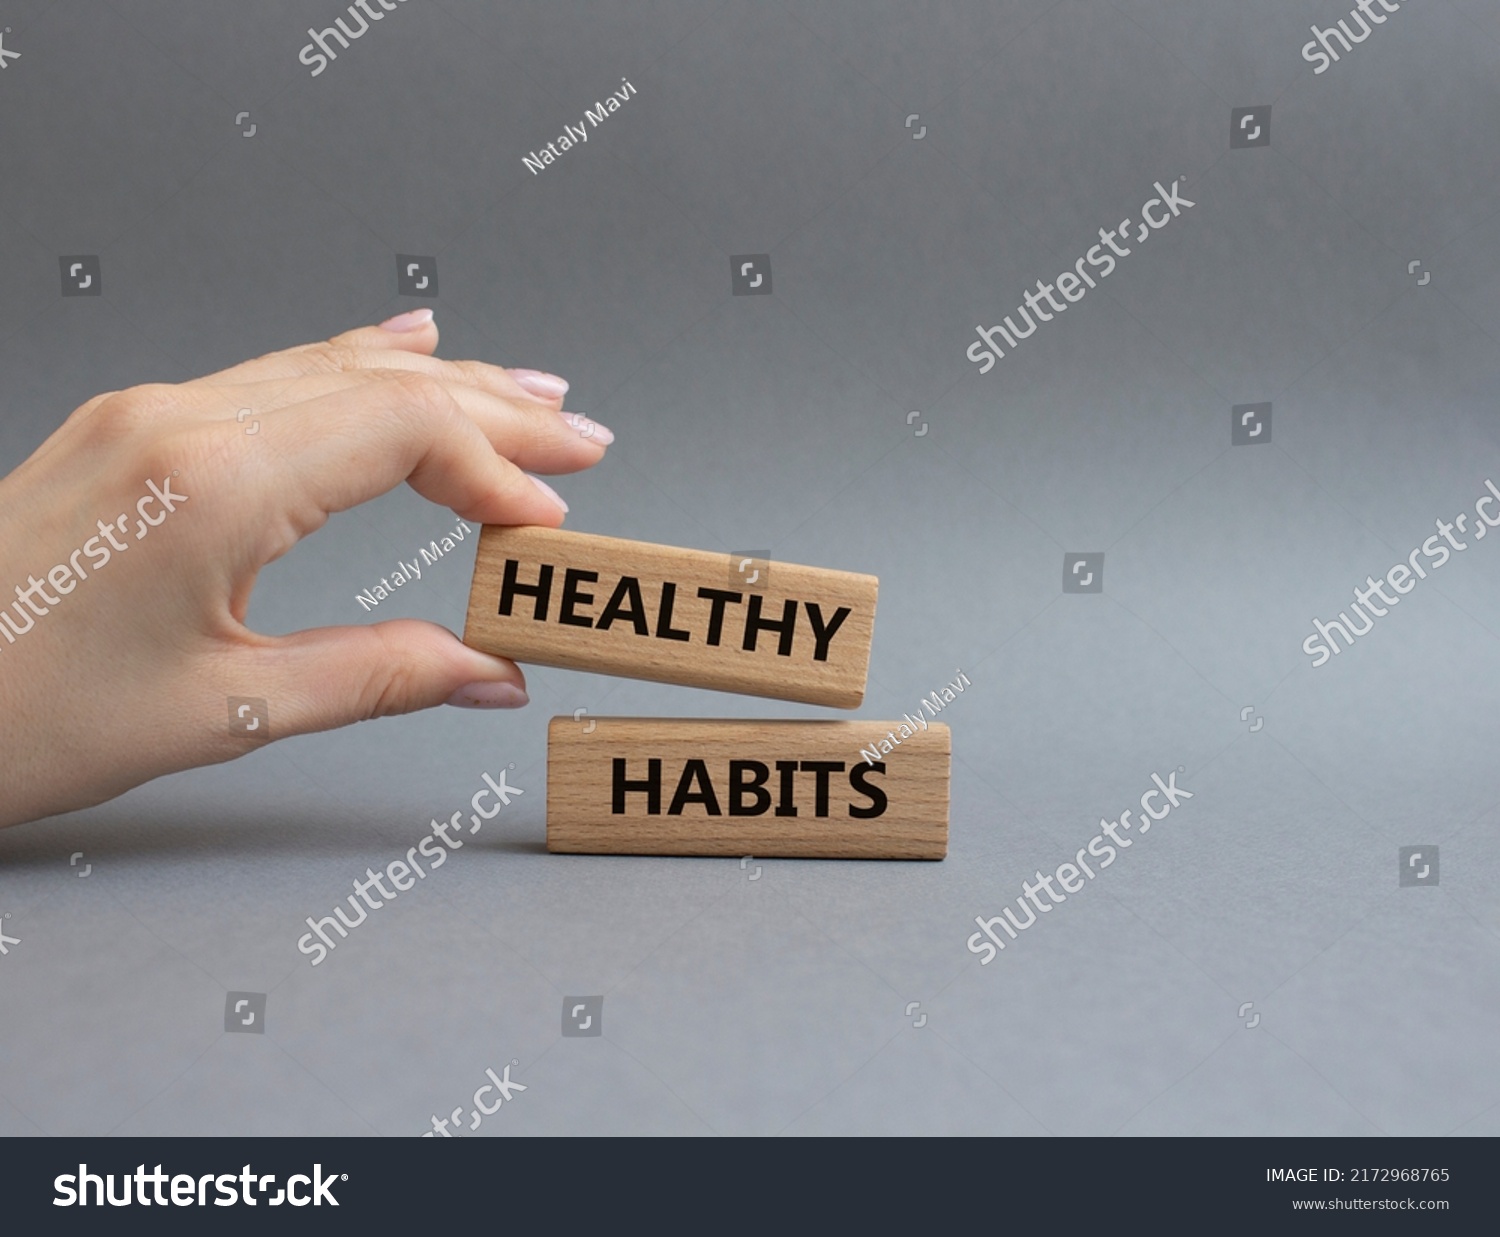 Healthy habits symbol. Concept word Healthy habits on wooden blocks. Beautiful grey background. Businessman hand. Business and Healthy habits concept. Copy space #2172968765